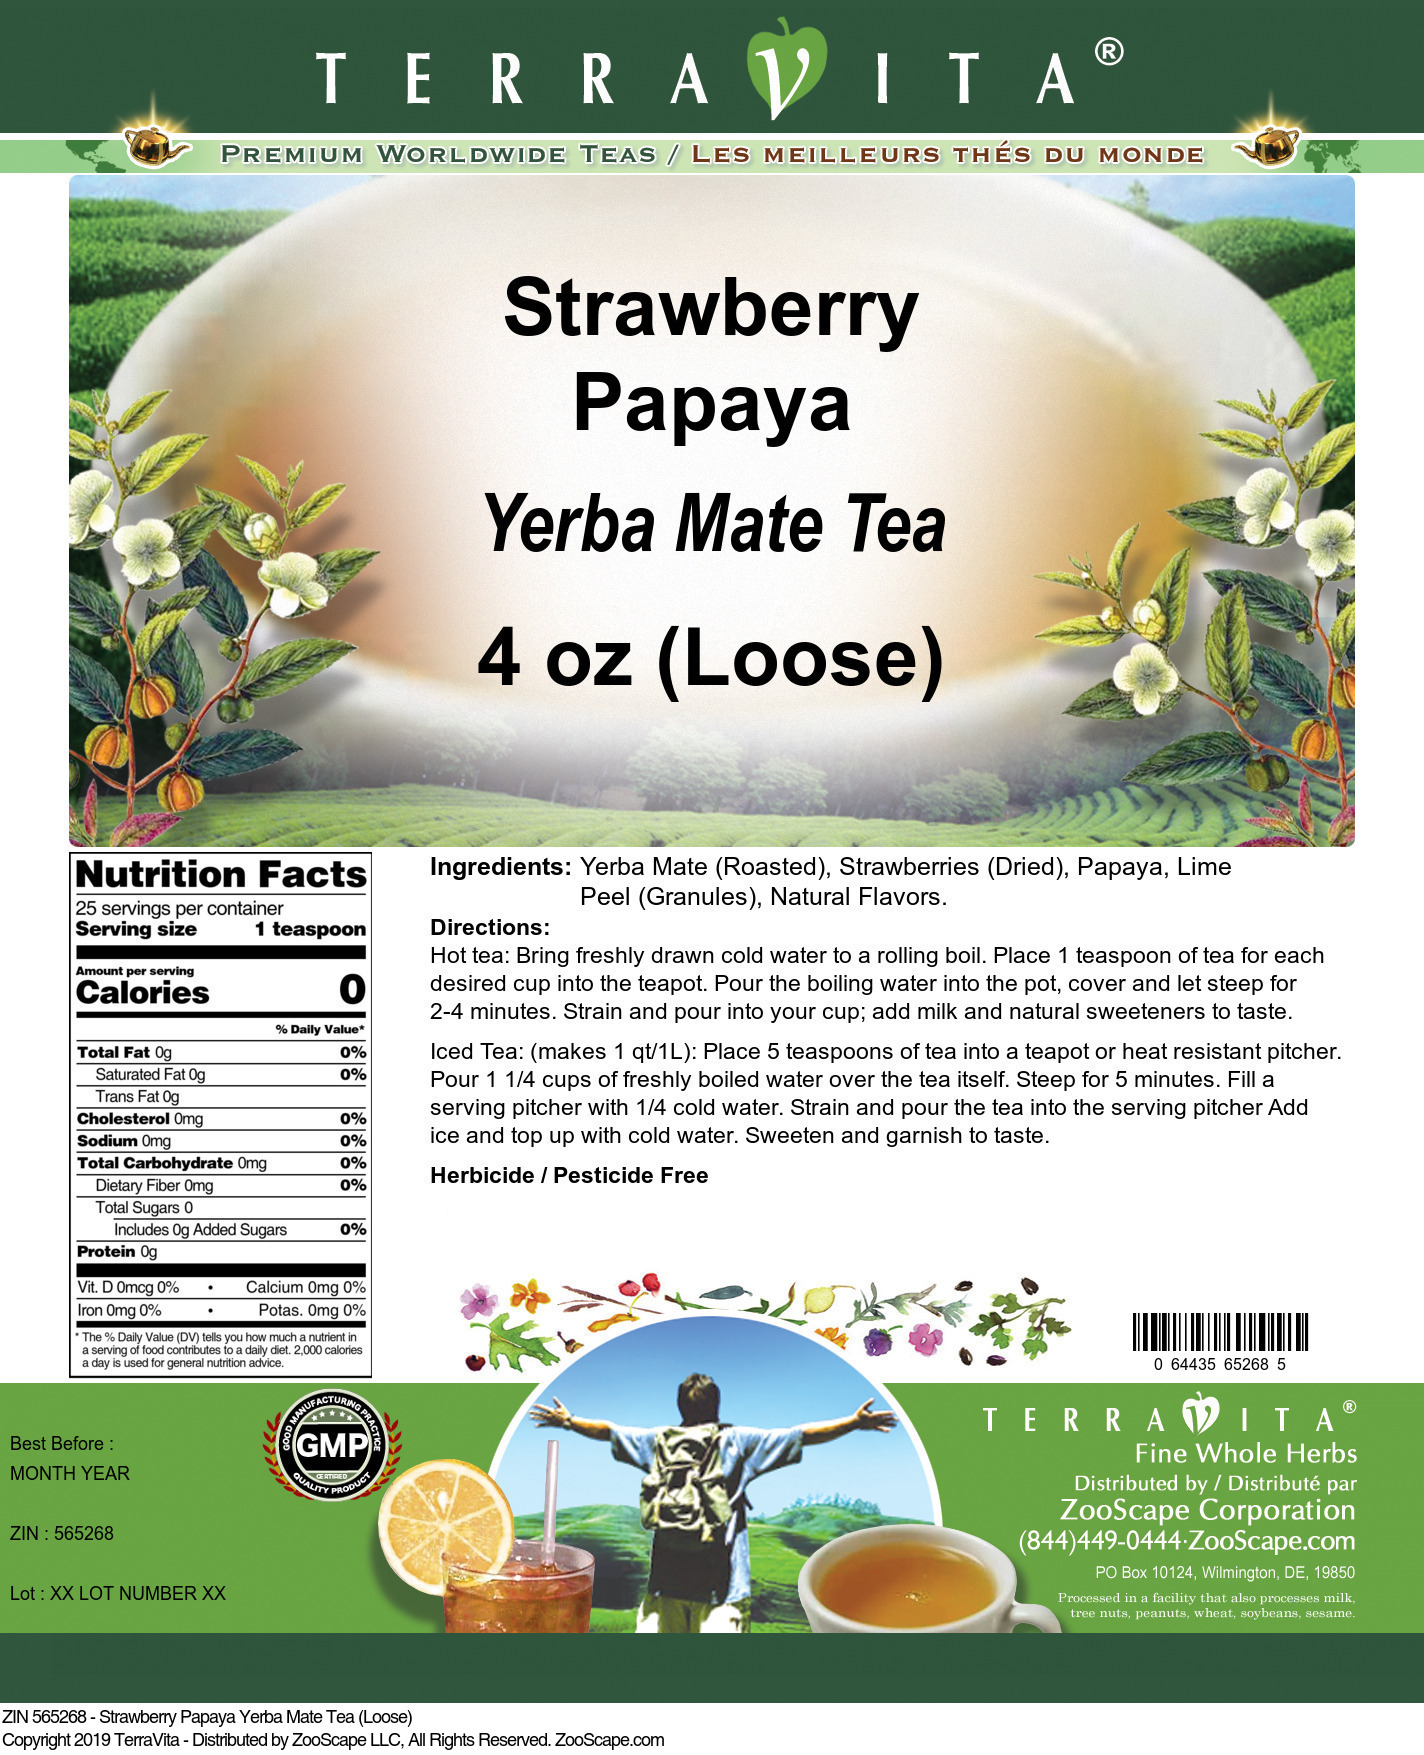 Strawberry Papaya Yerba Mate Tea (Loose) - Label